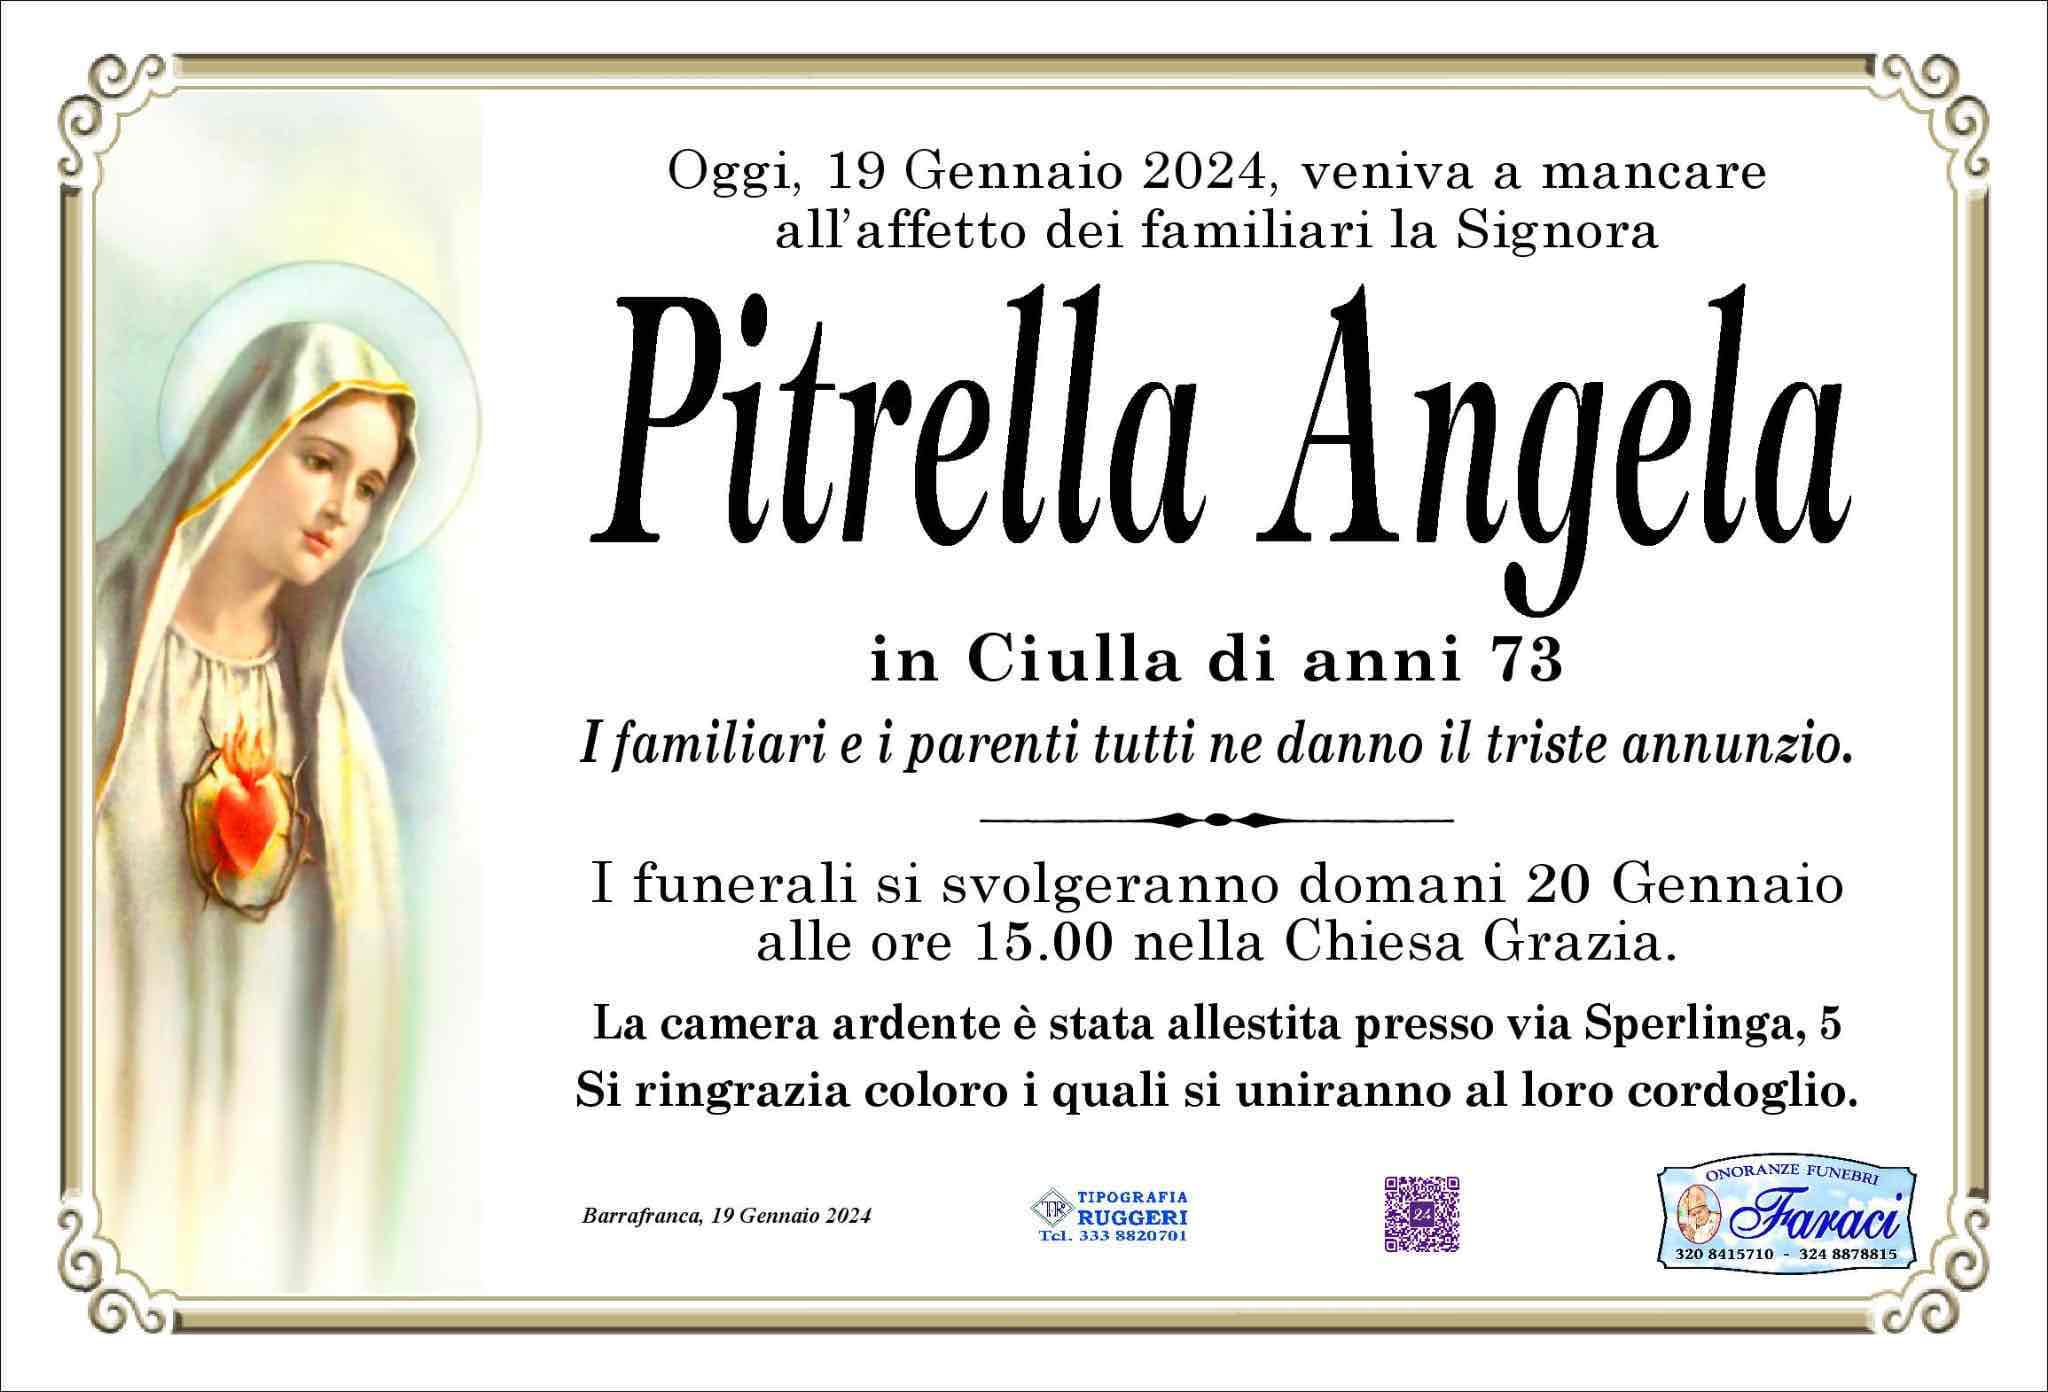 Angela Pitrella